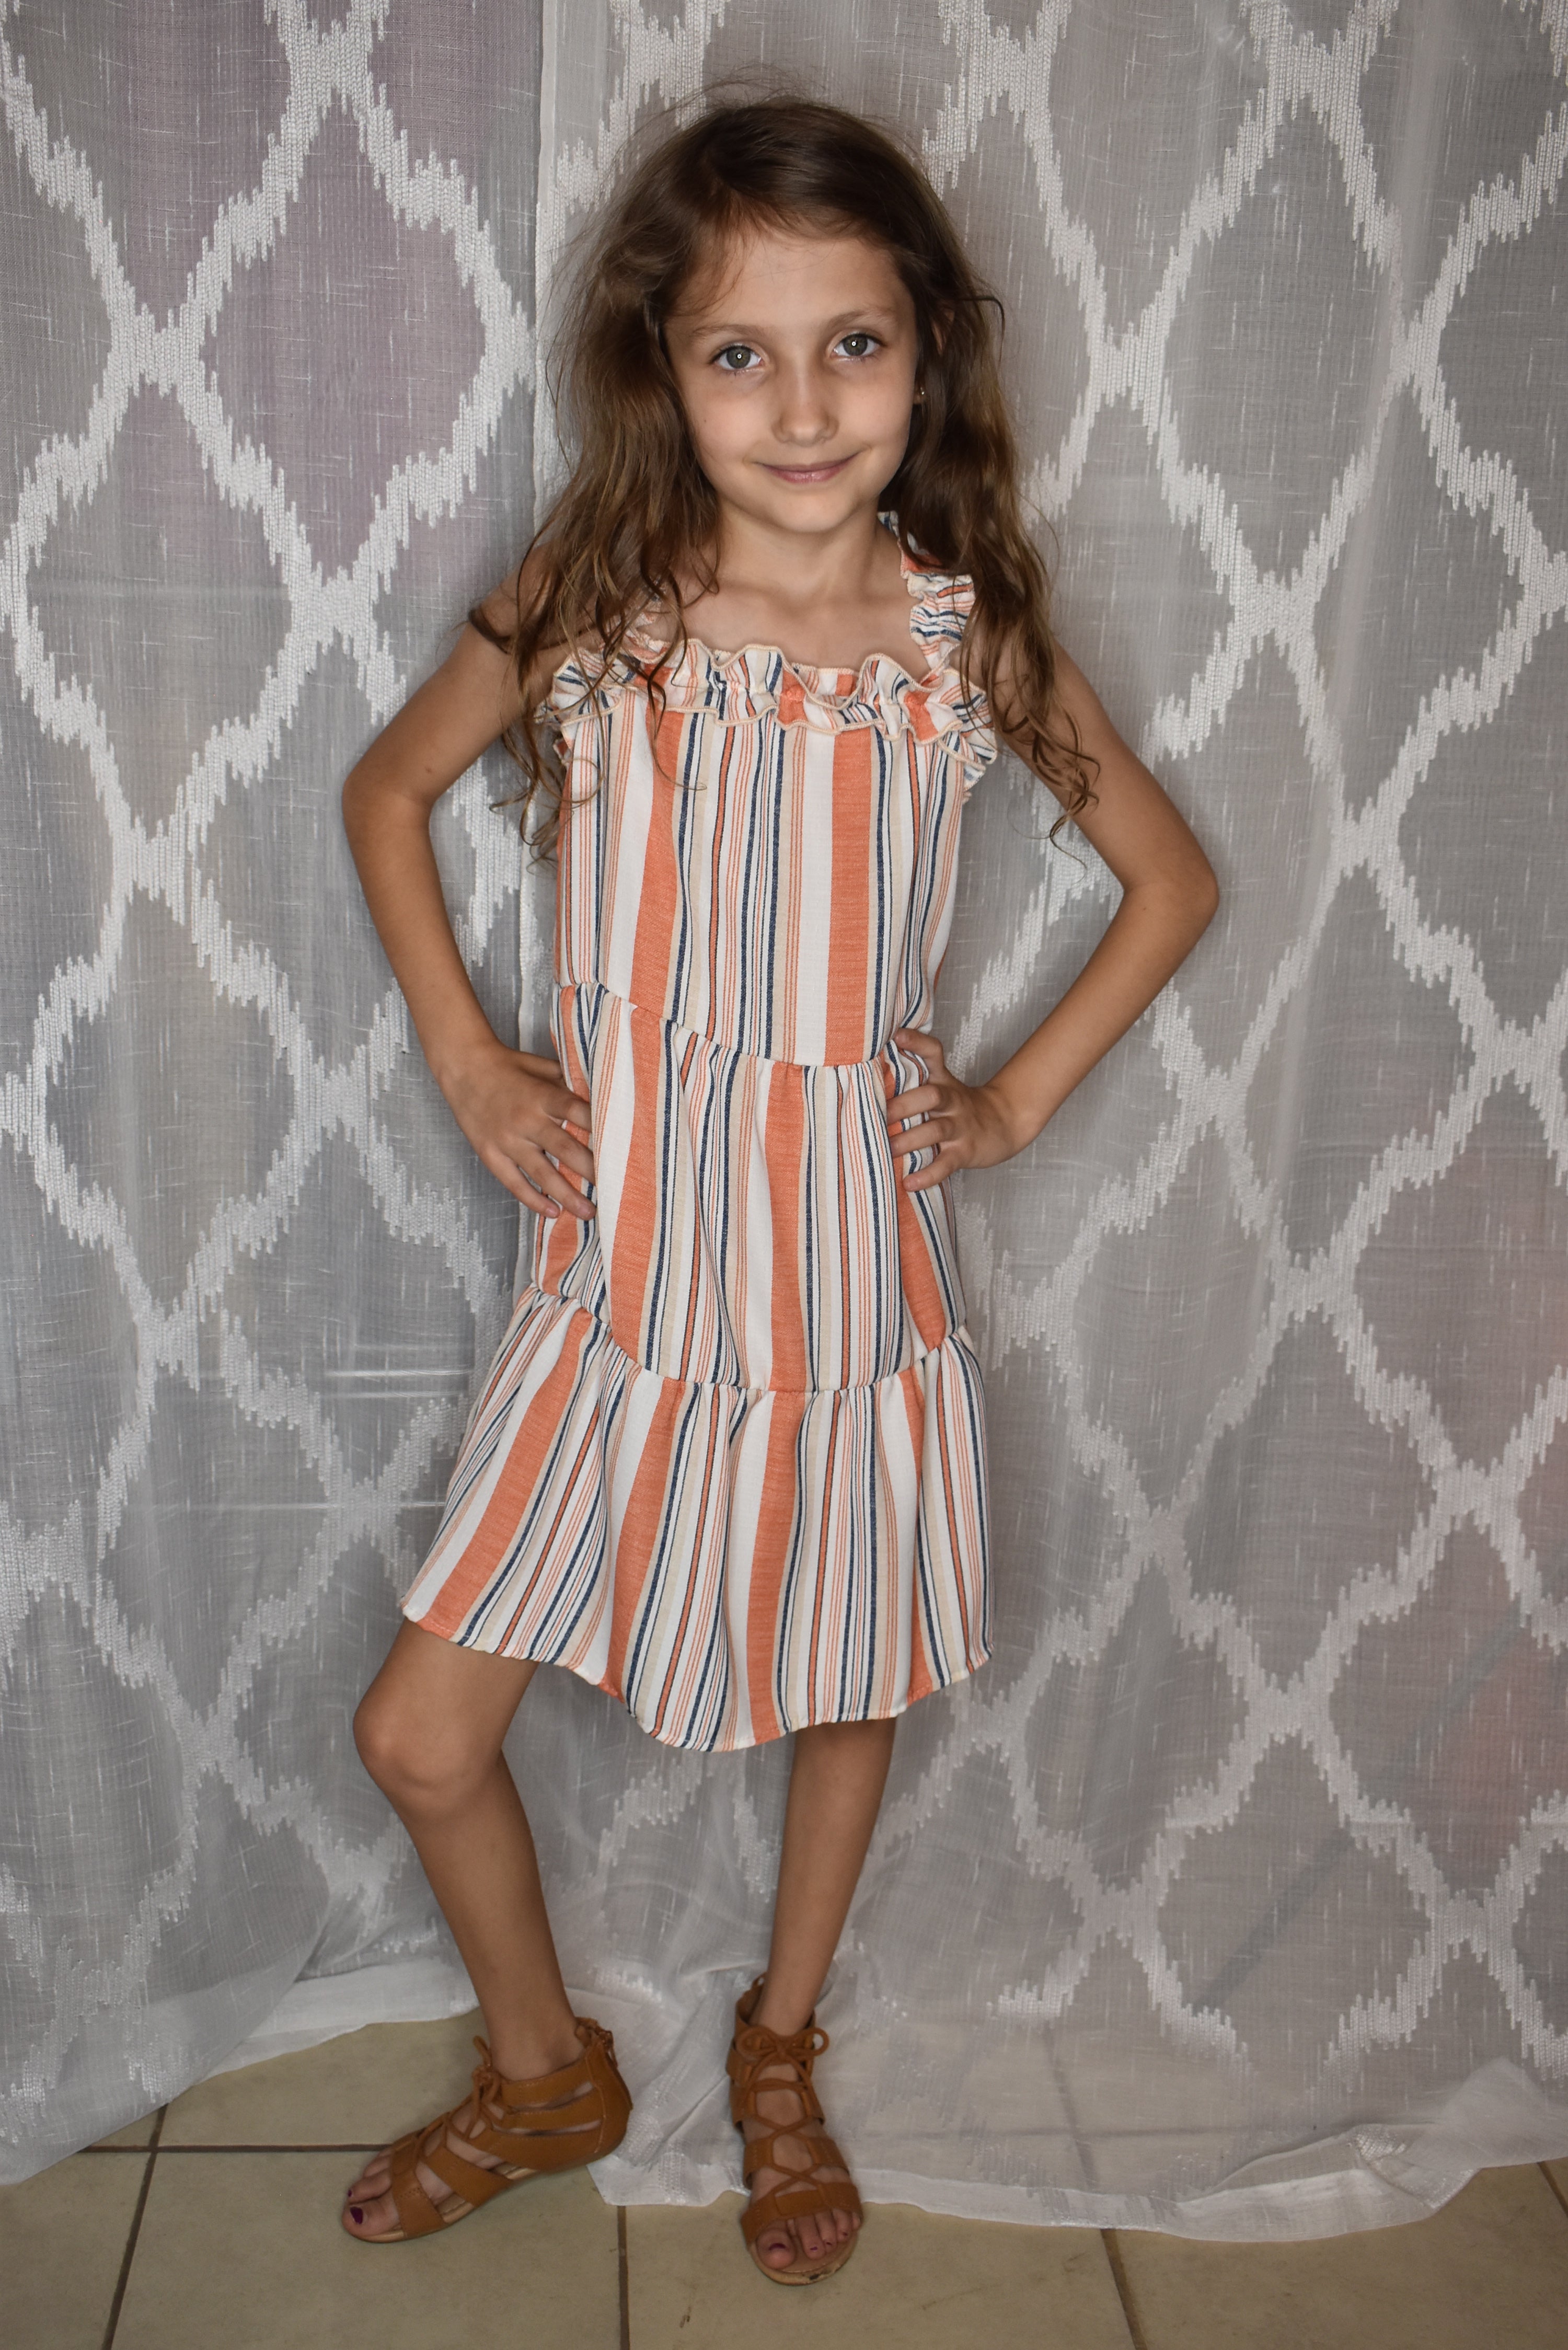 Orange and white strip Dress - Tween size